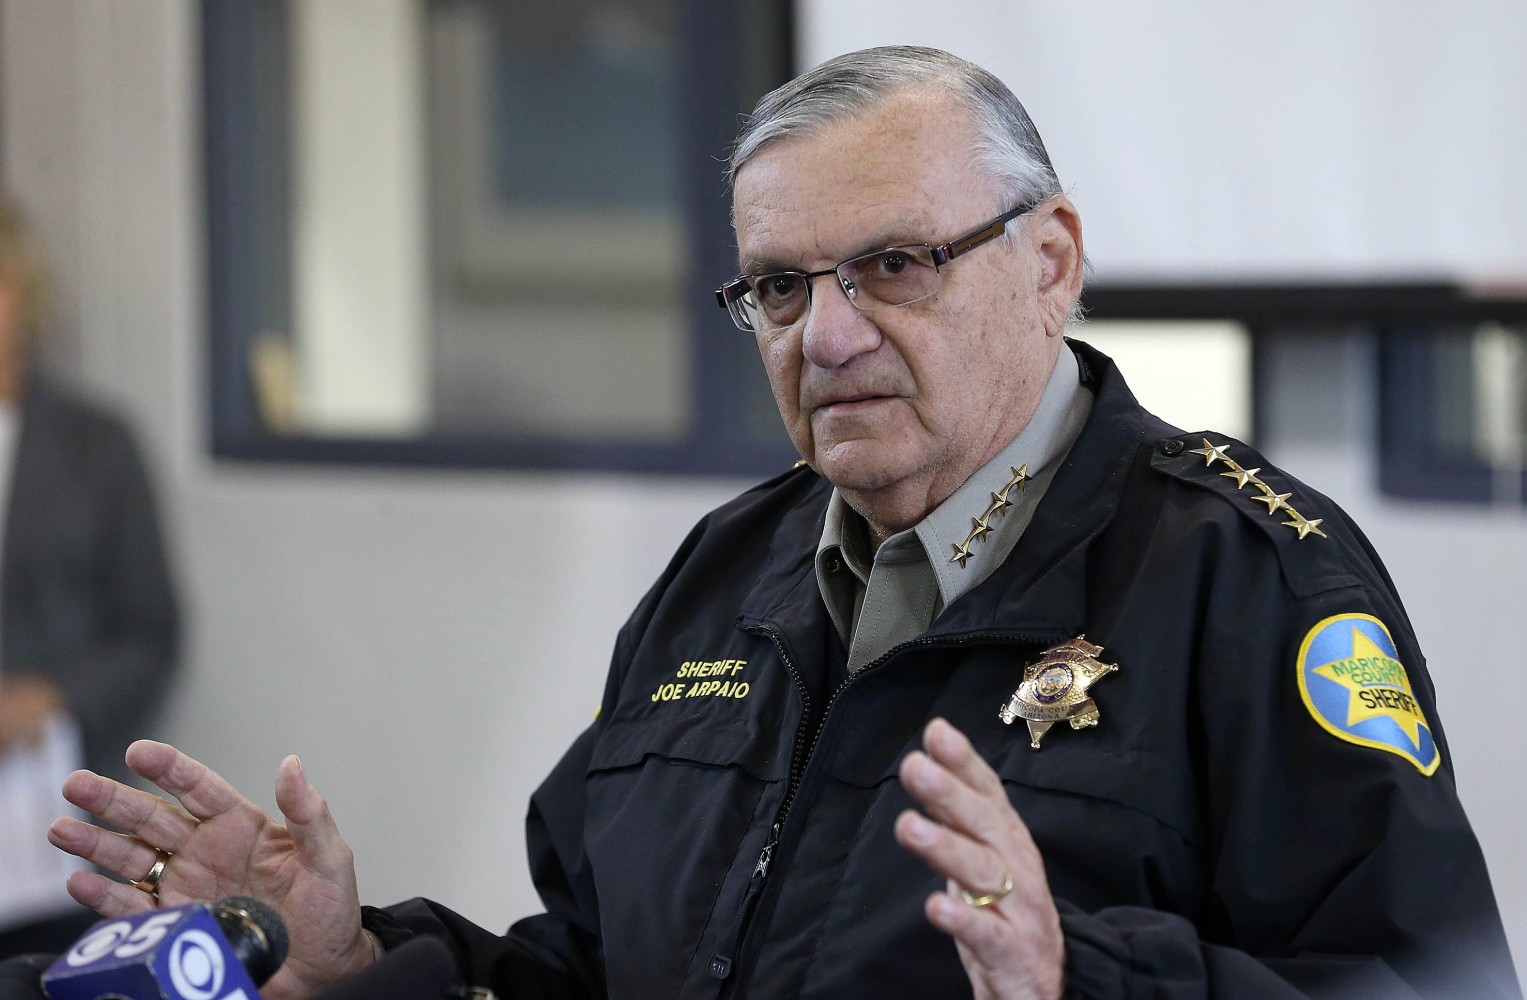 Judge Mulls How to Punish Sheriff Joe Arpaio for Racially Profiling